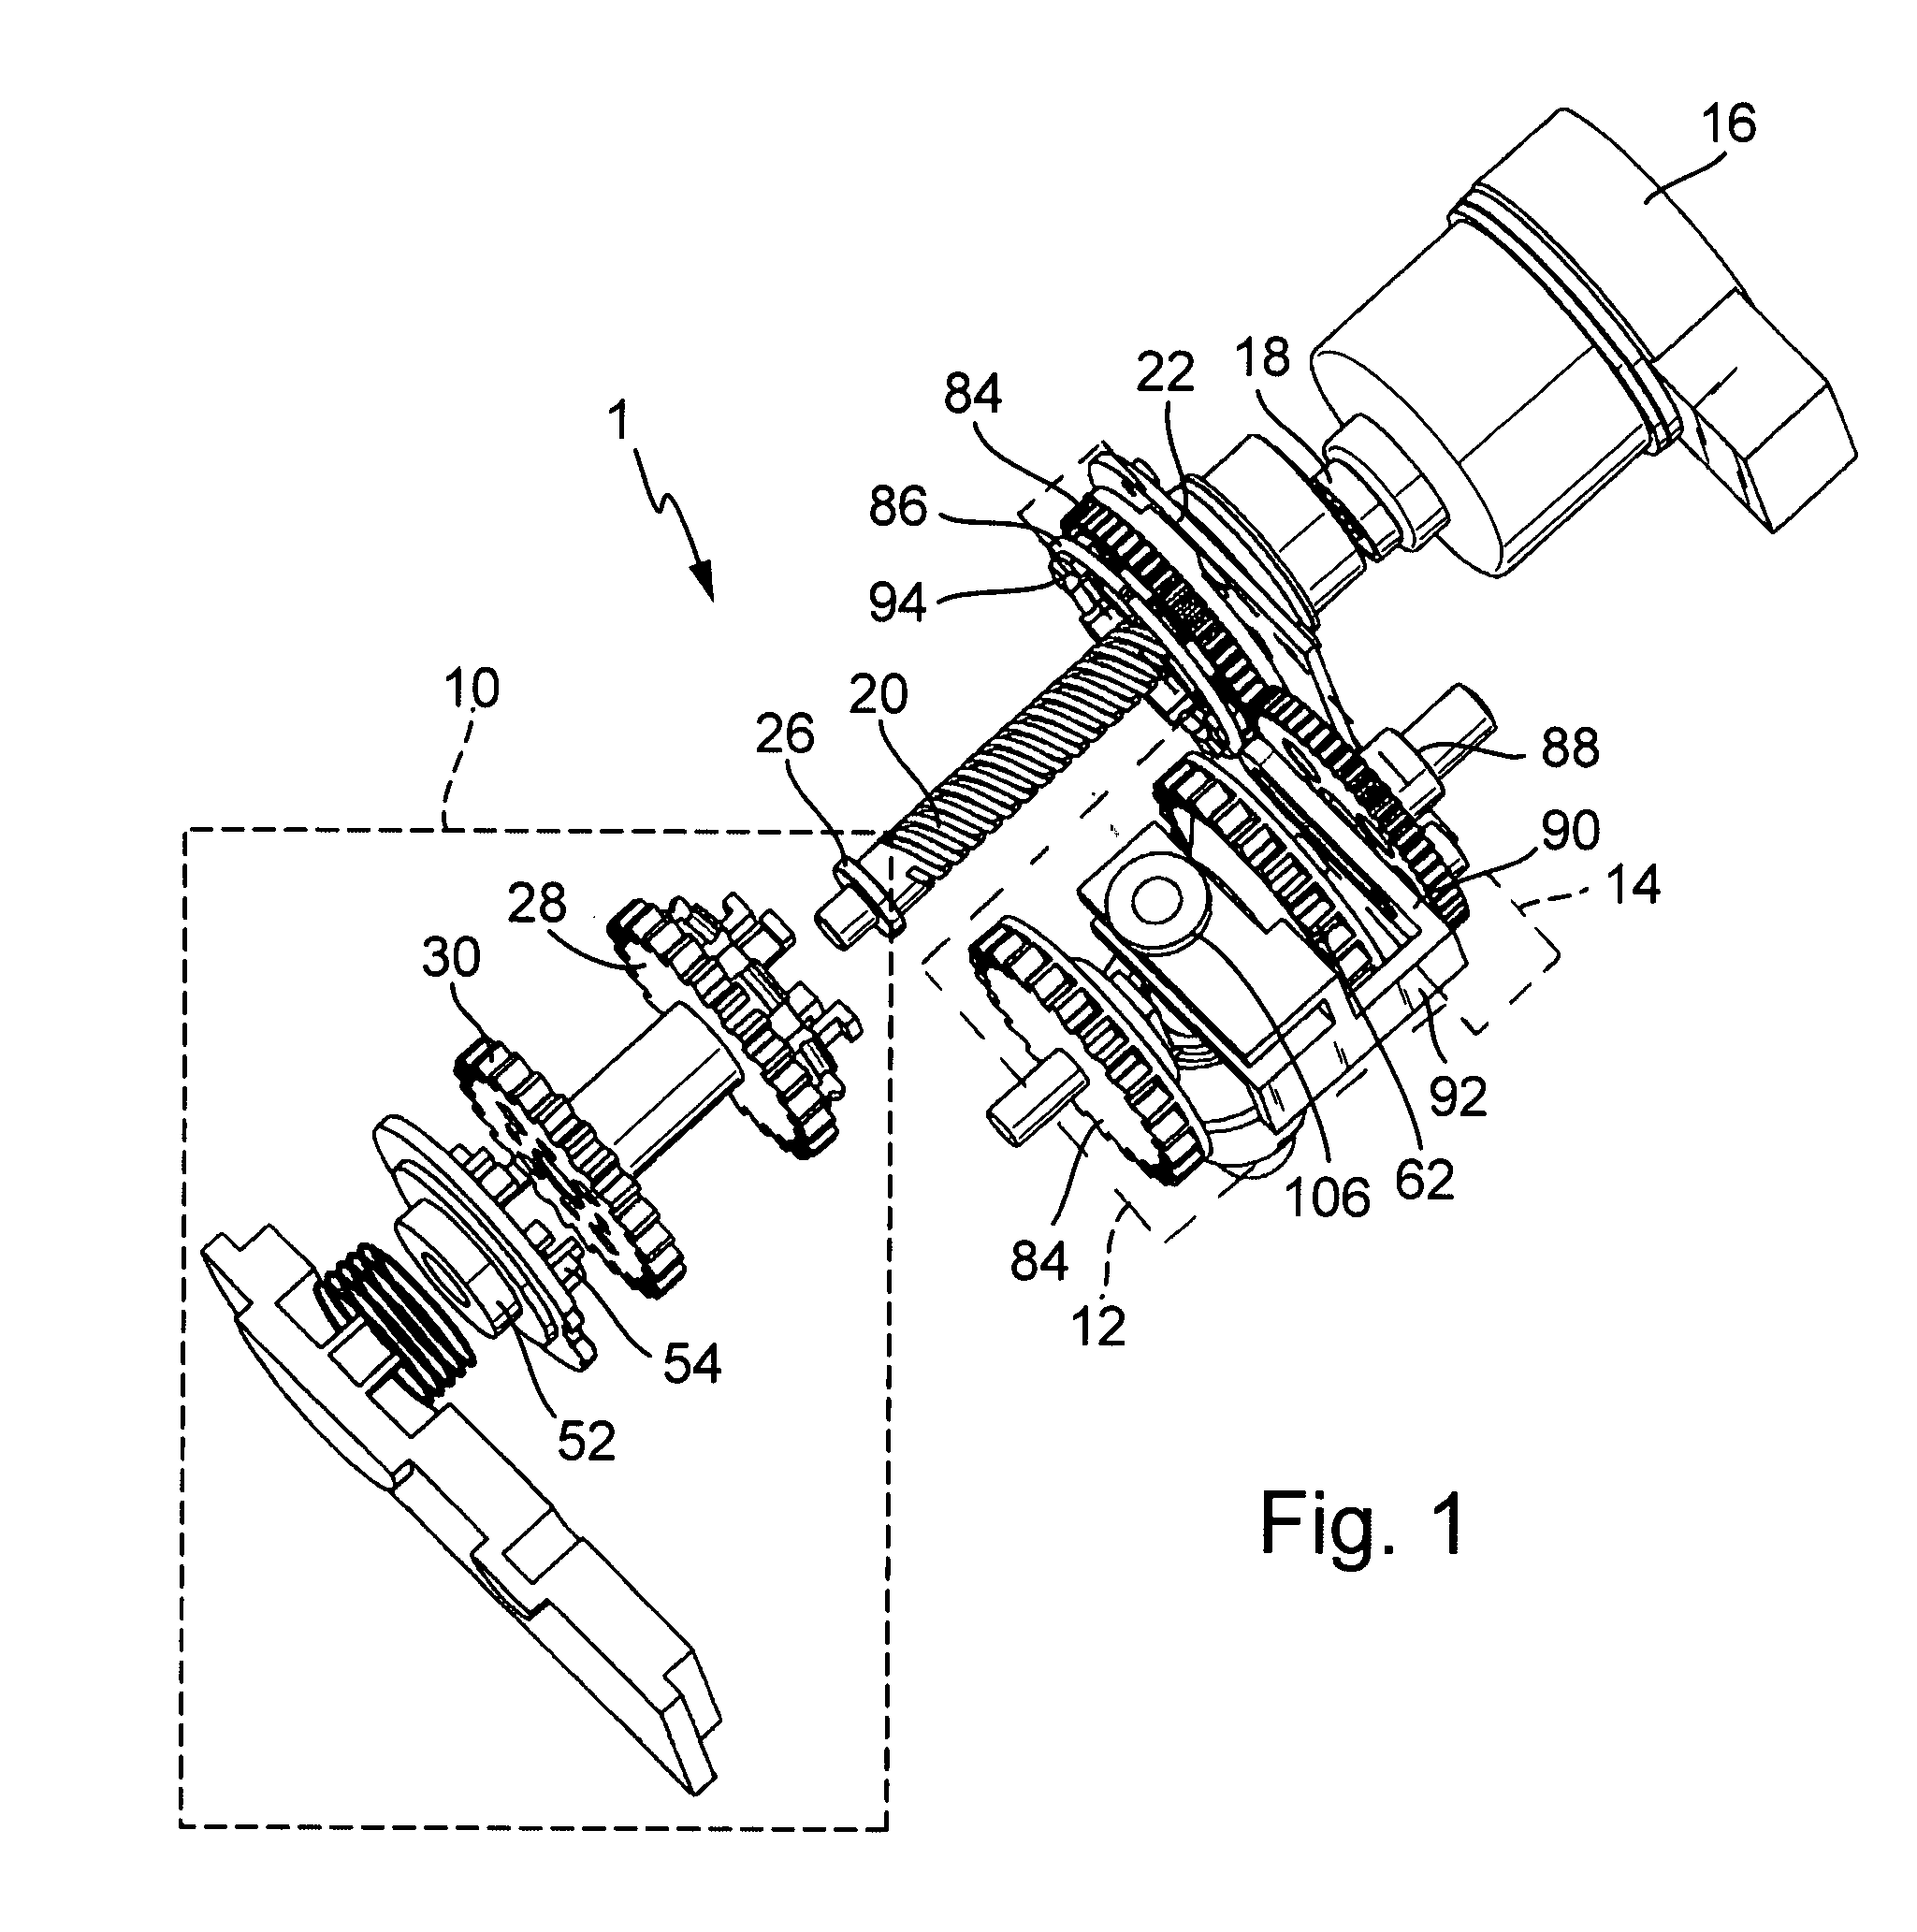 Single motor transmission shifting mechanism for a motor vehicle transmission